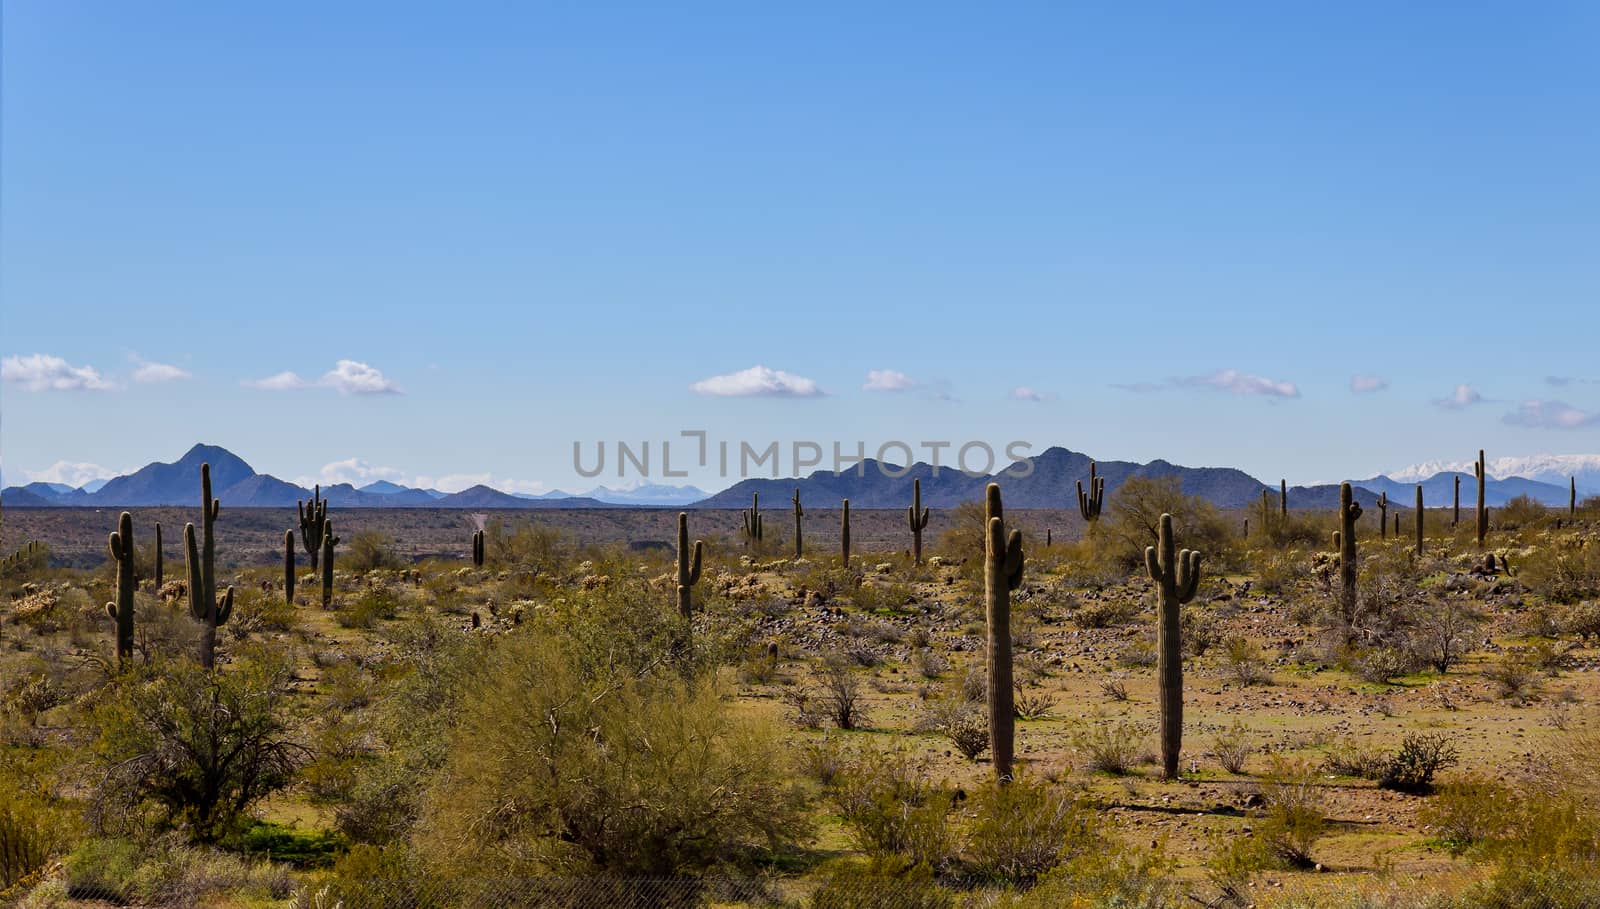 Arizona desert shines on mountains with saguaro cactus in landscape